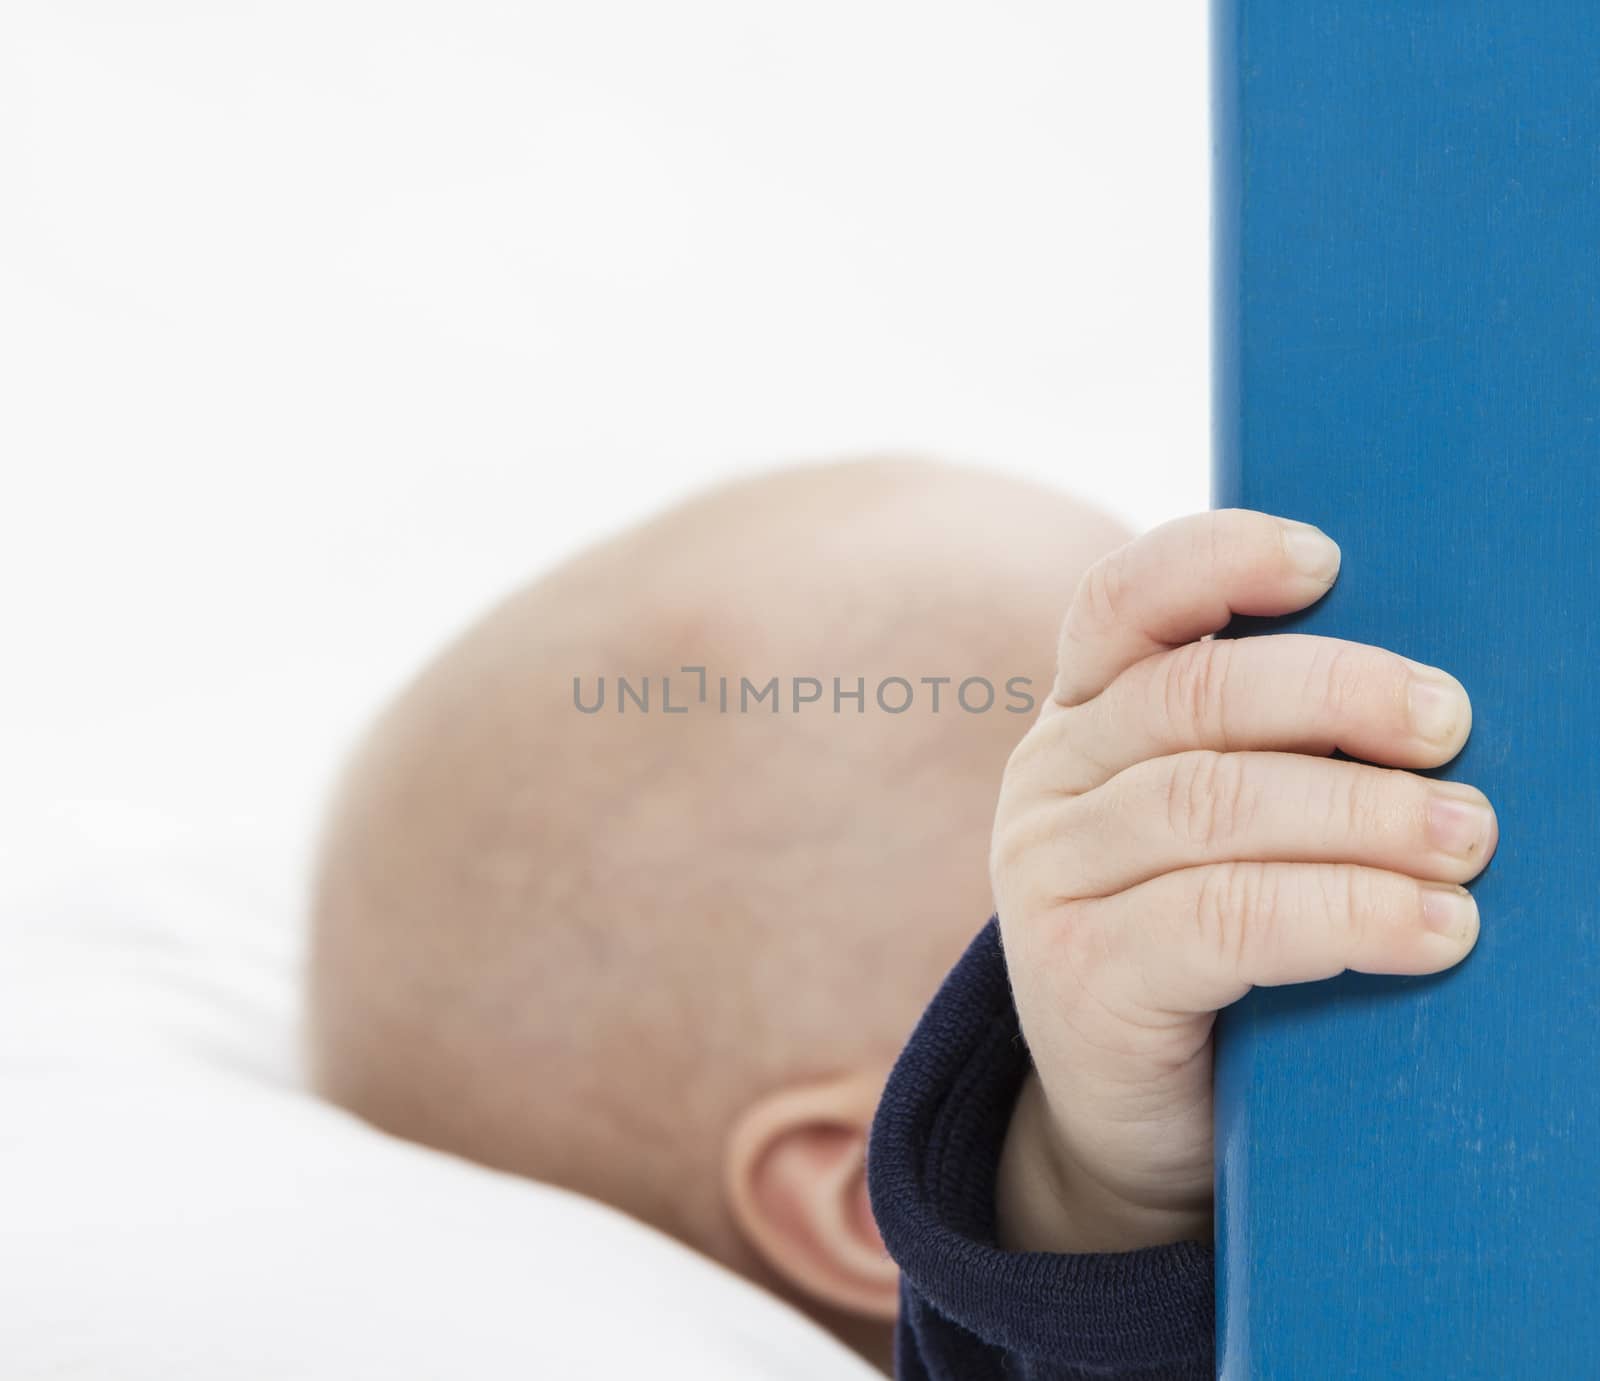 nurslings hand holding blue wooden board in grey background. studio shot